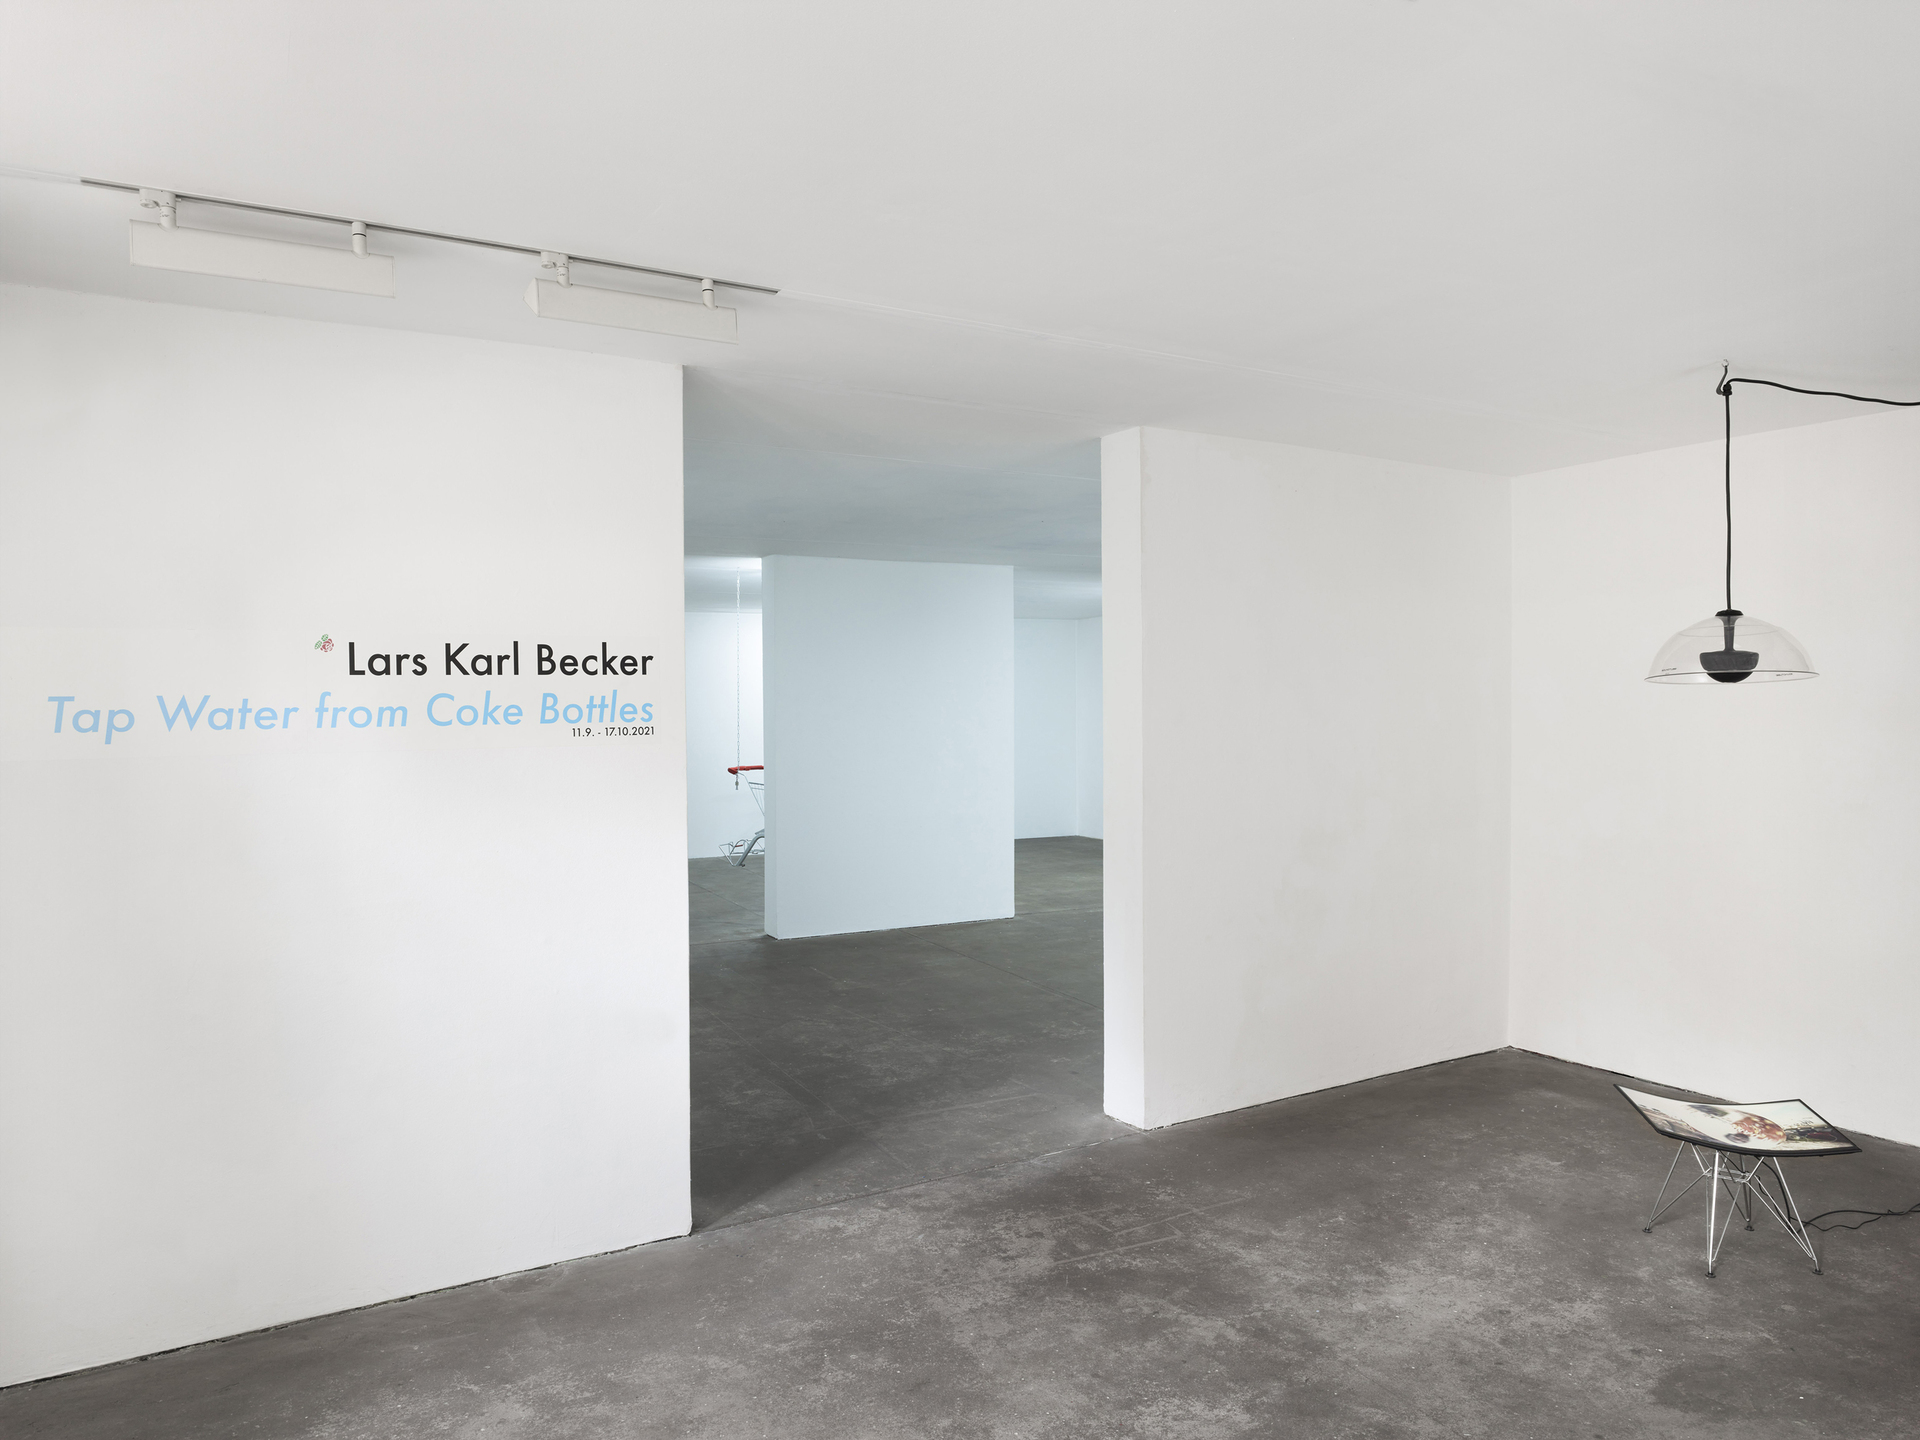 Lars Karl Becker, Tap Water from Coke Bottles, 2021 (exhibition view). Photo: Roman Mensing, artdoc.de